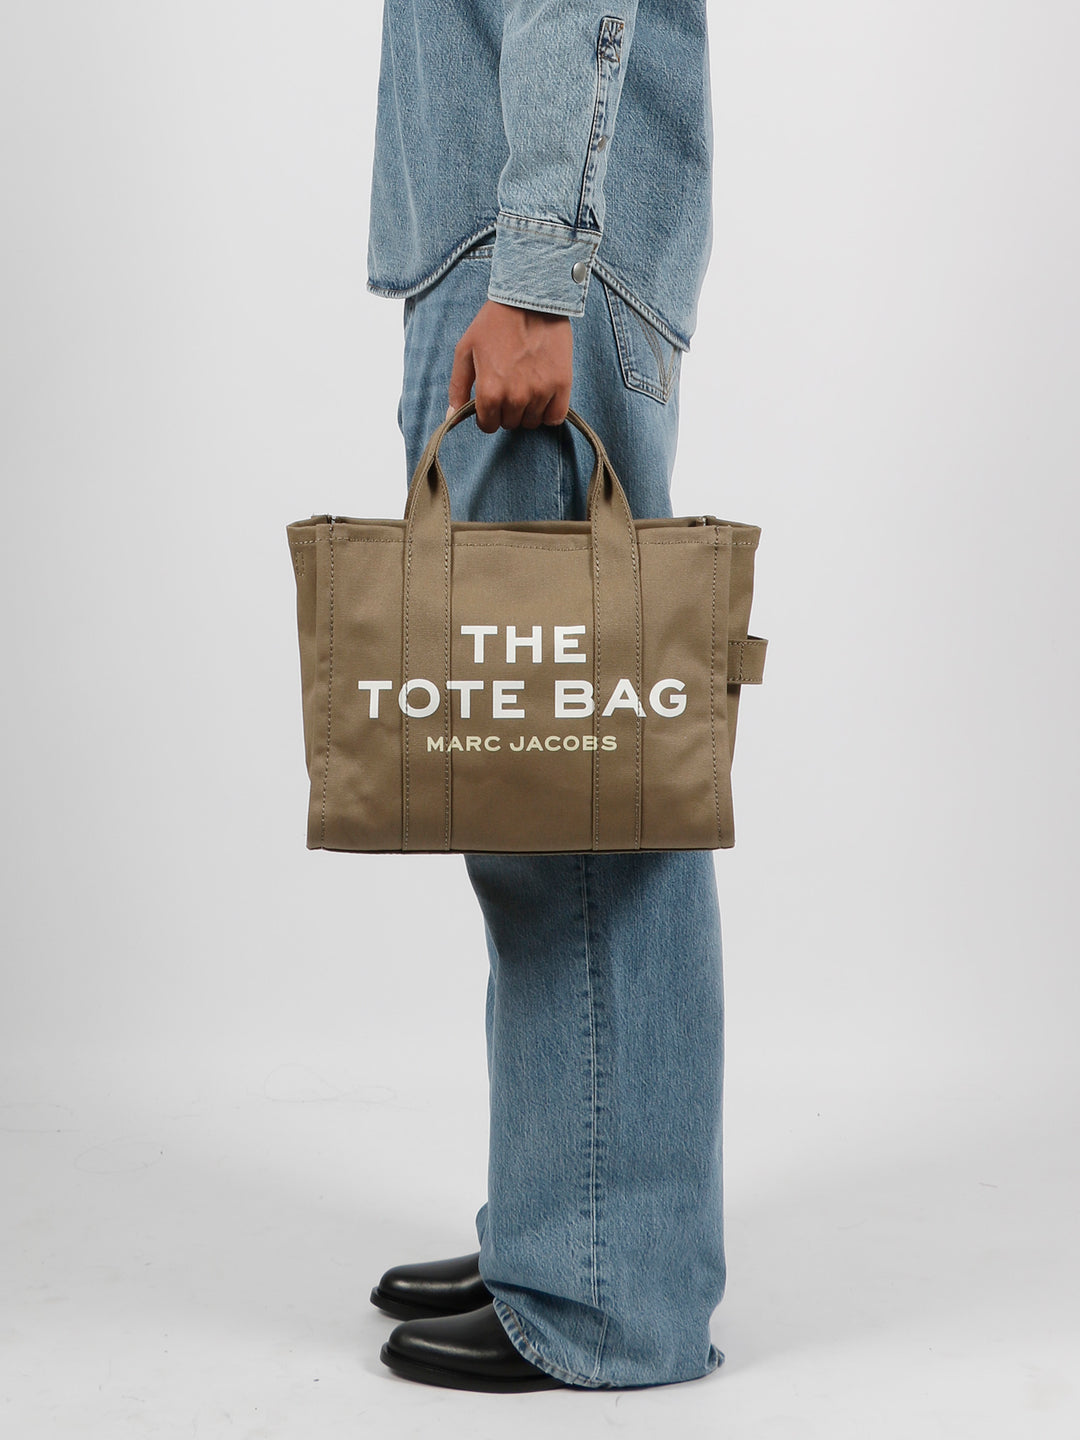 The medium tote bag